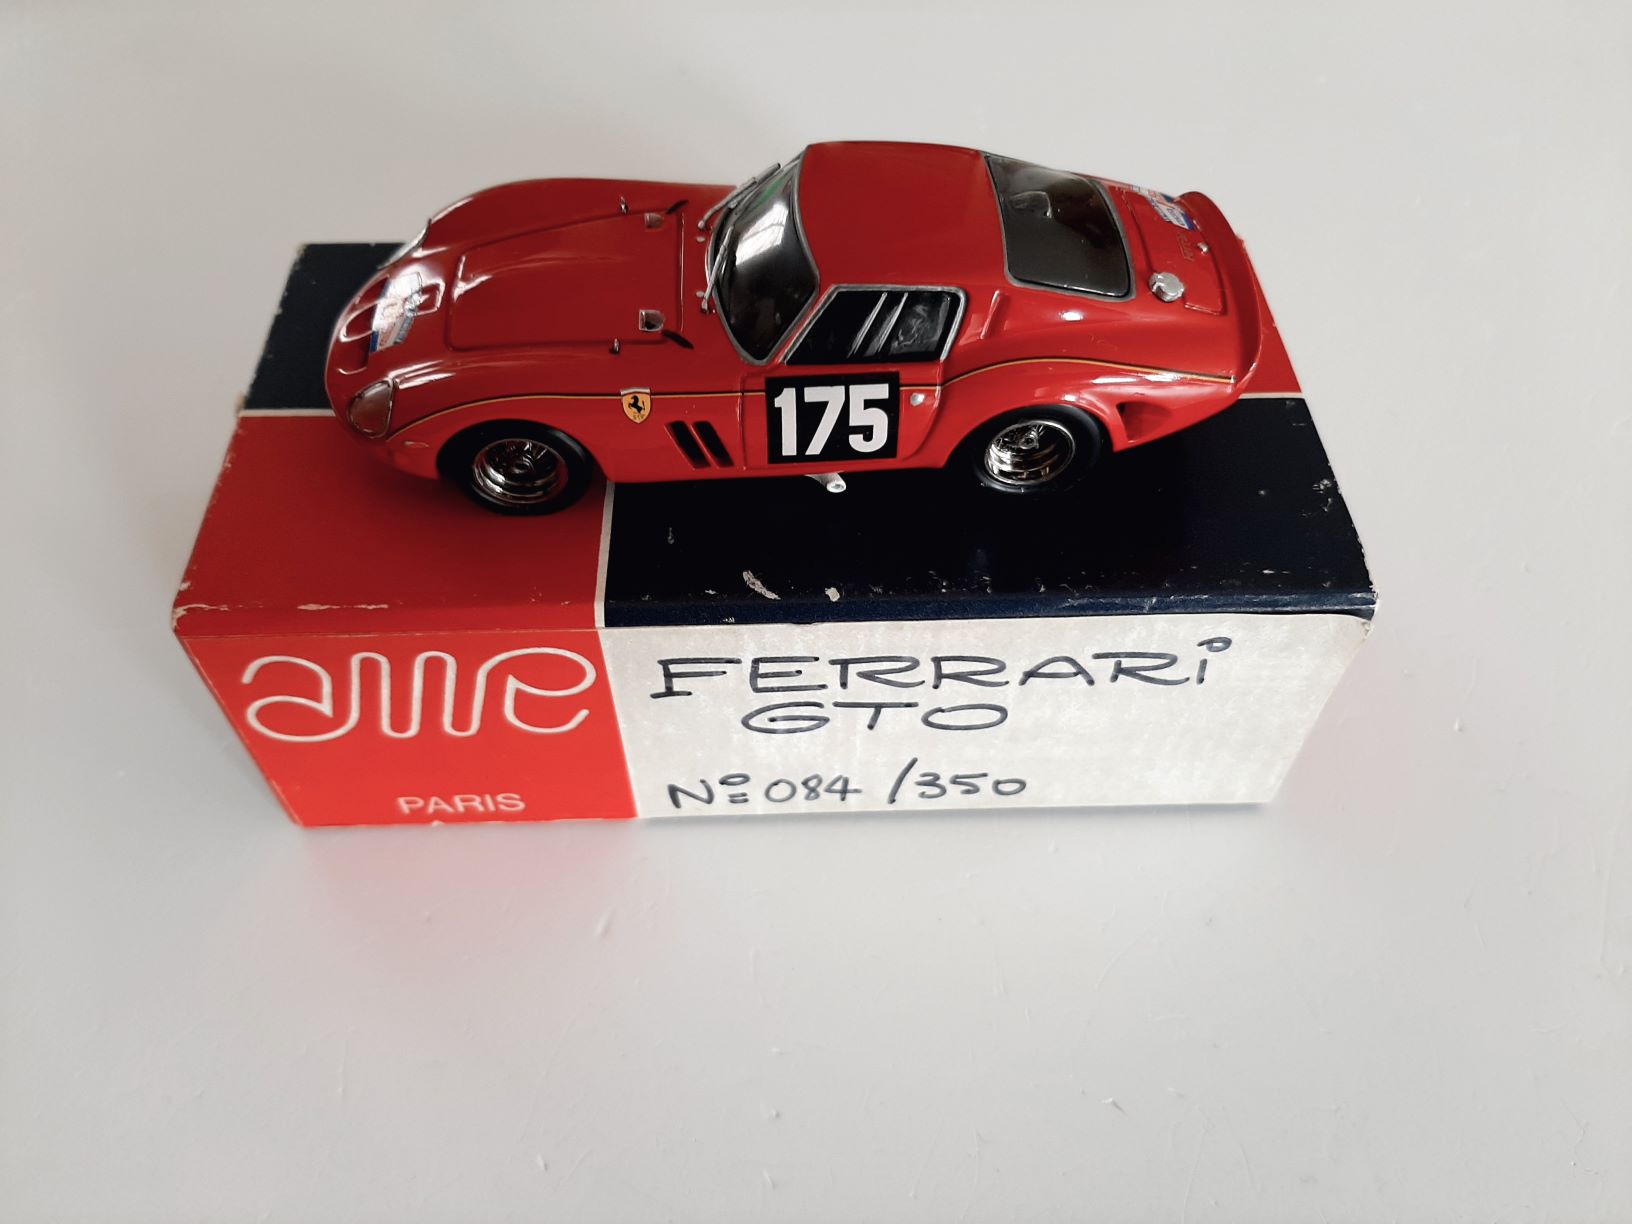 AM Ruf : Ferrari 250 GTO Tdf 1964 -> SOLD